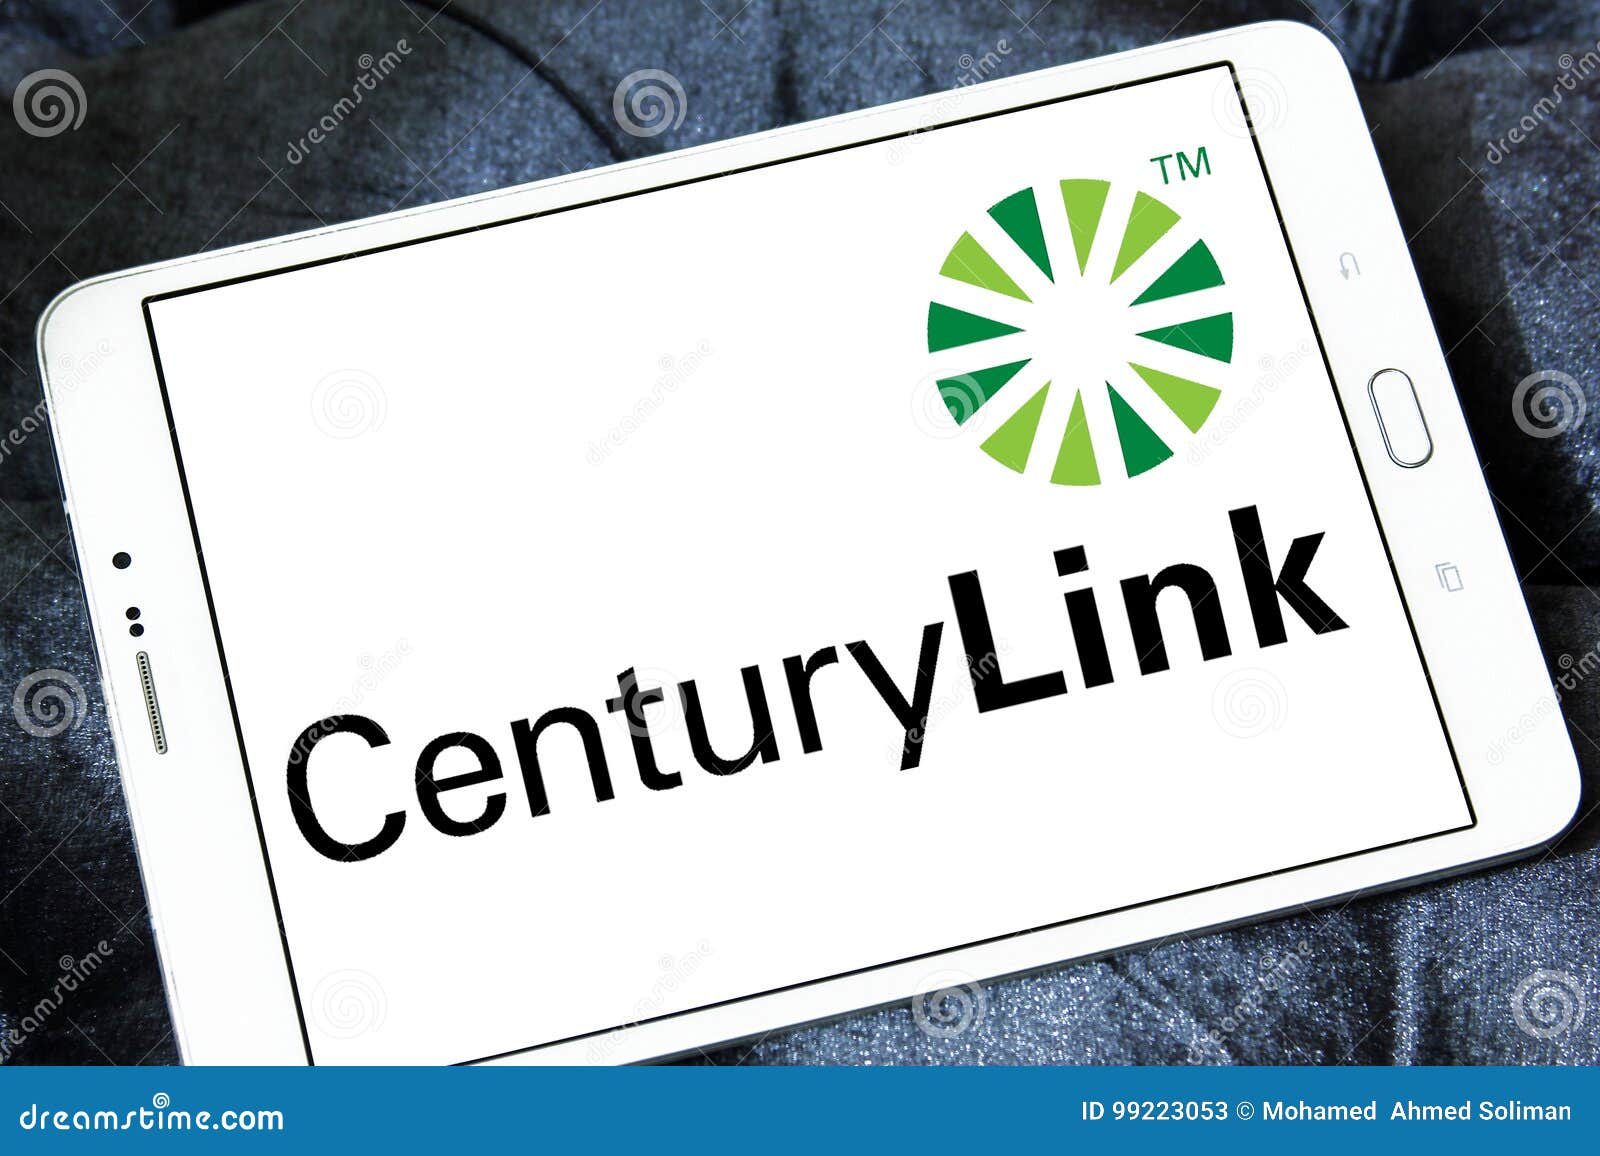 CenturyLink to Acquire Level 3 for $25 Billion - Variety